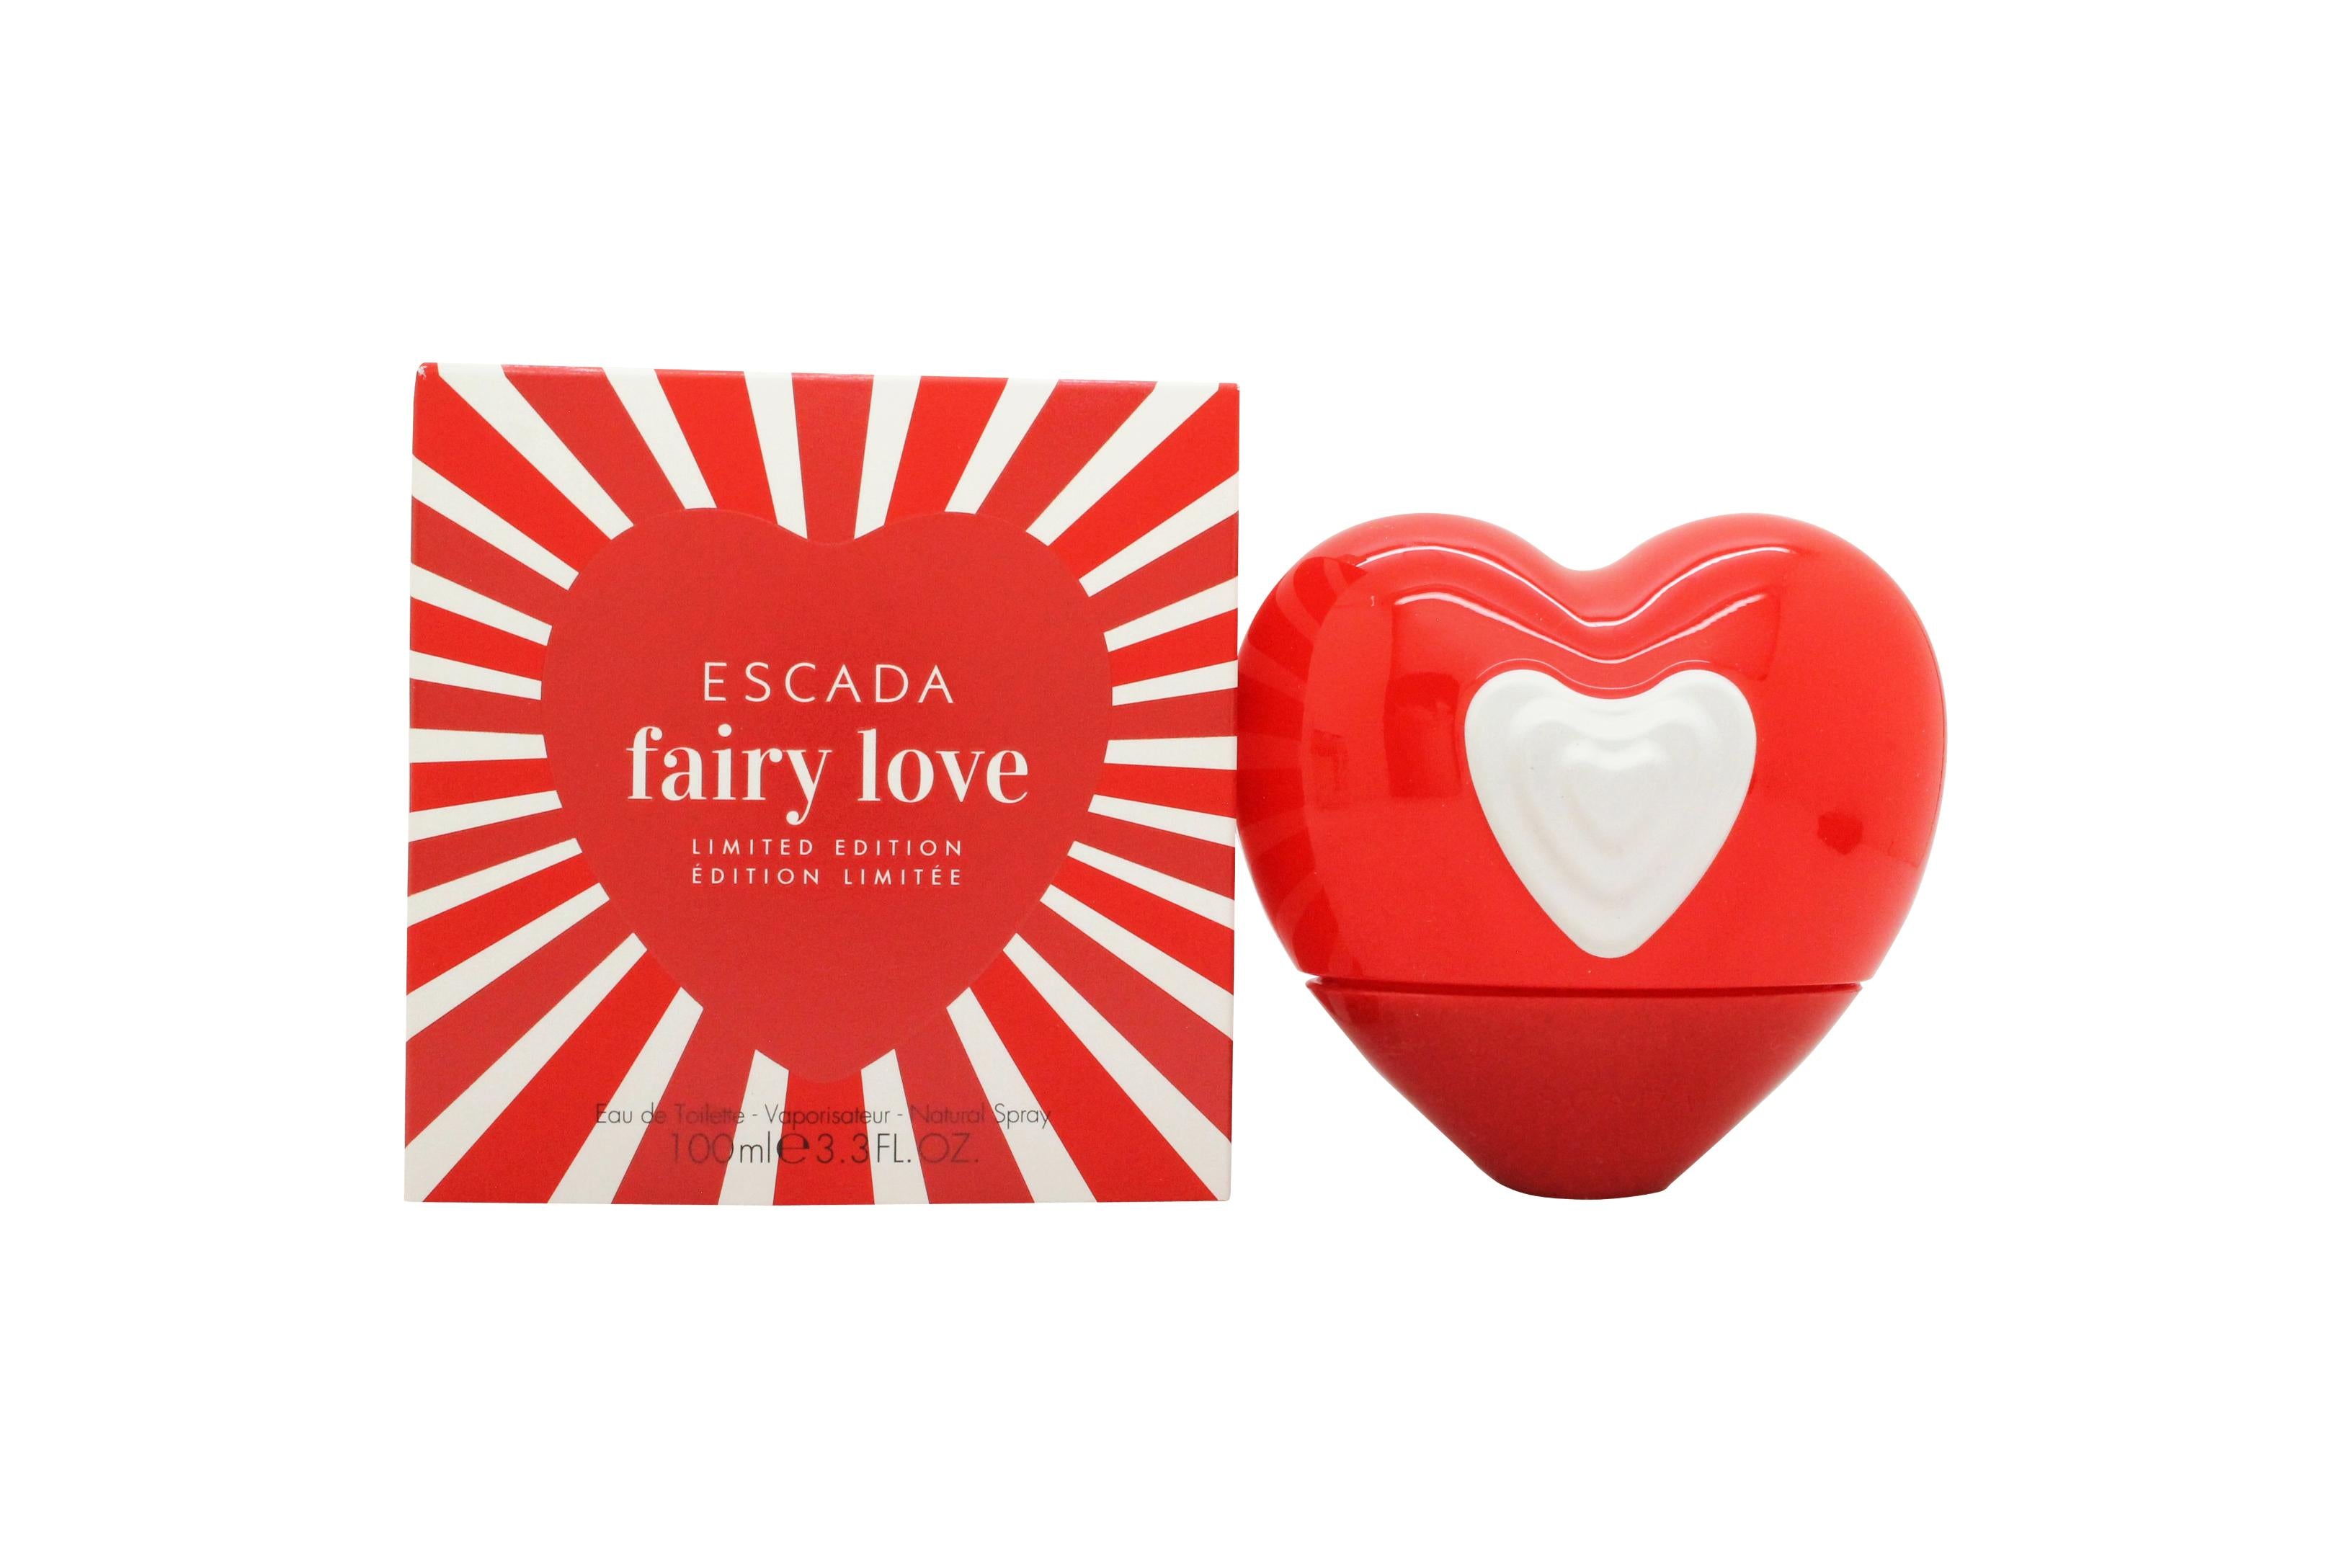 View Escada Fairy Love Eau de Toilette 100ml Spray Limited Edition information